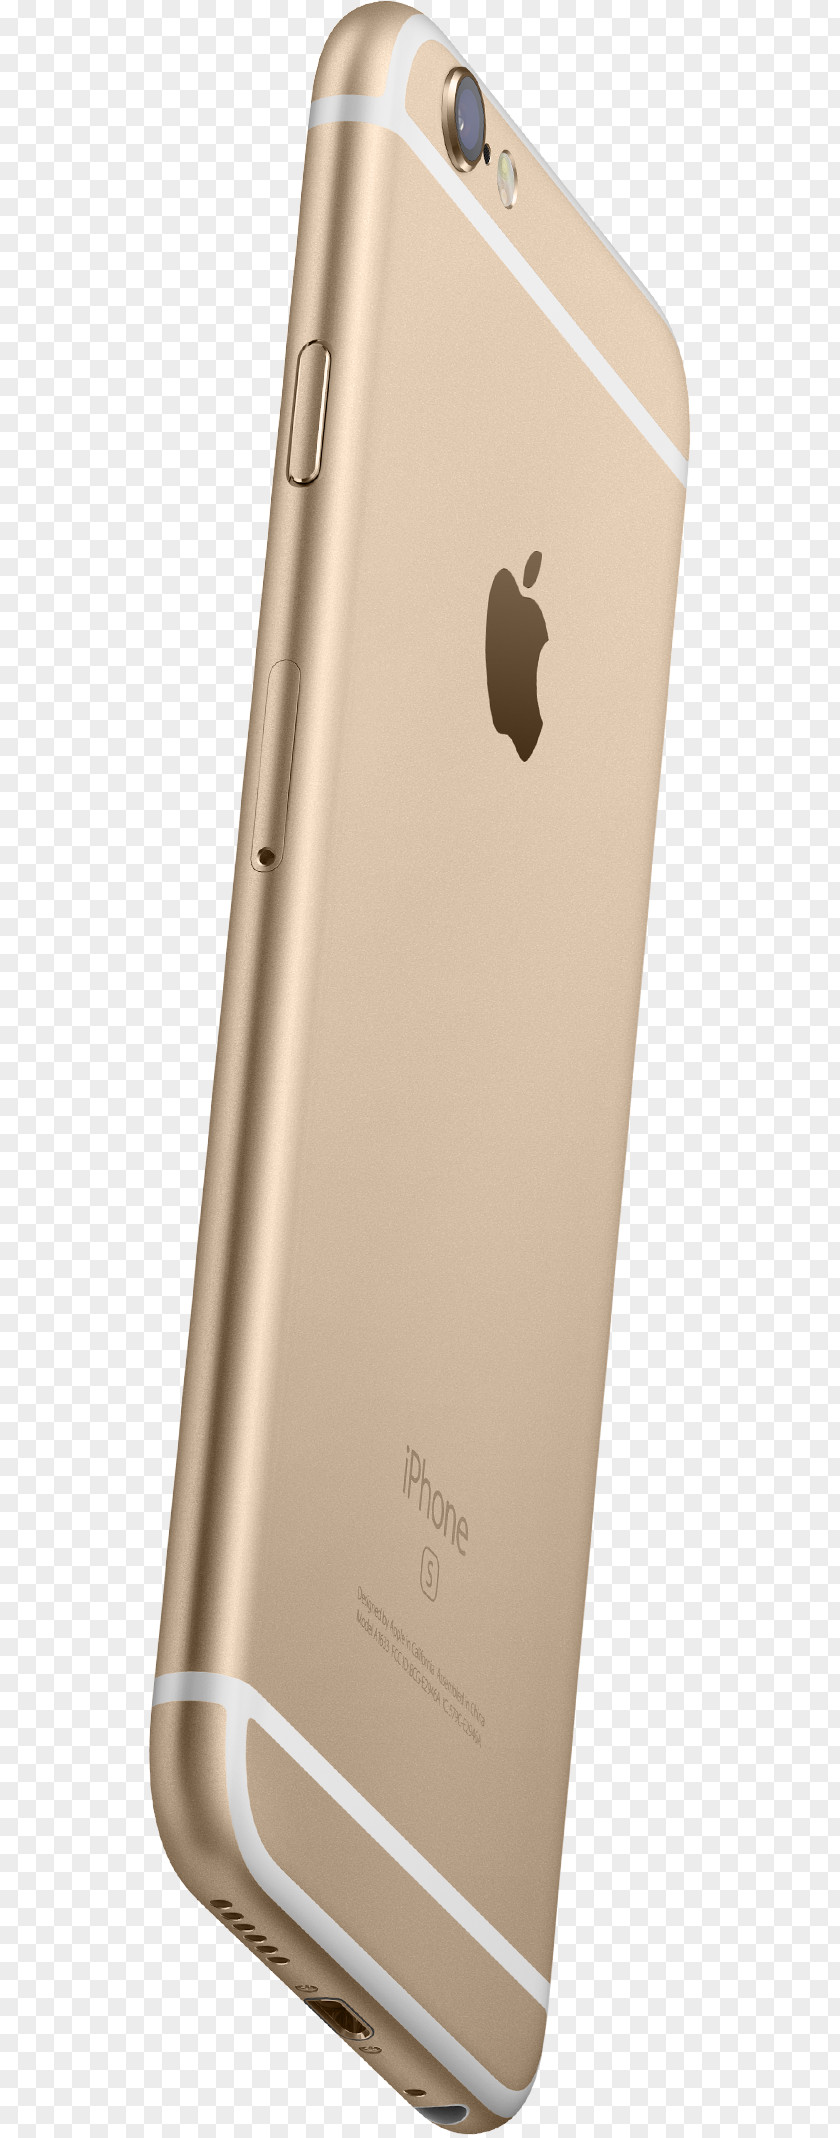 Golden Apple Six Phone IPhone 6s Plus 5s Smartphone IOS PNG